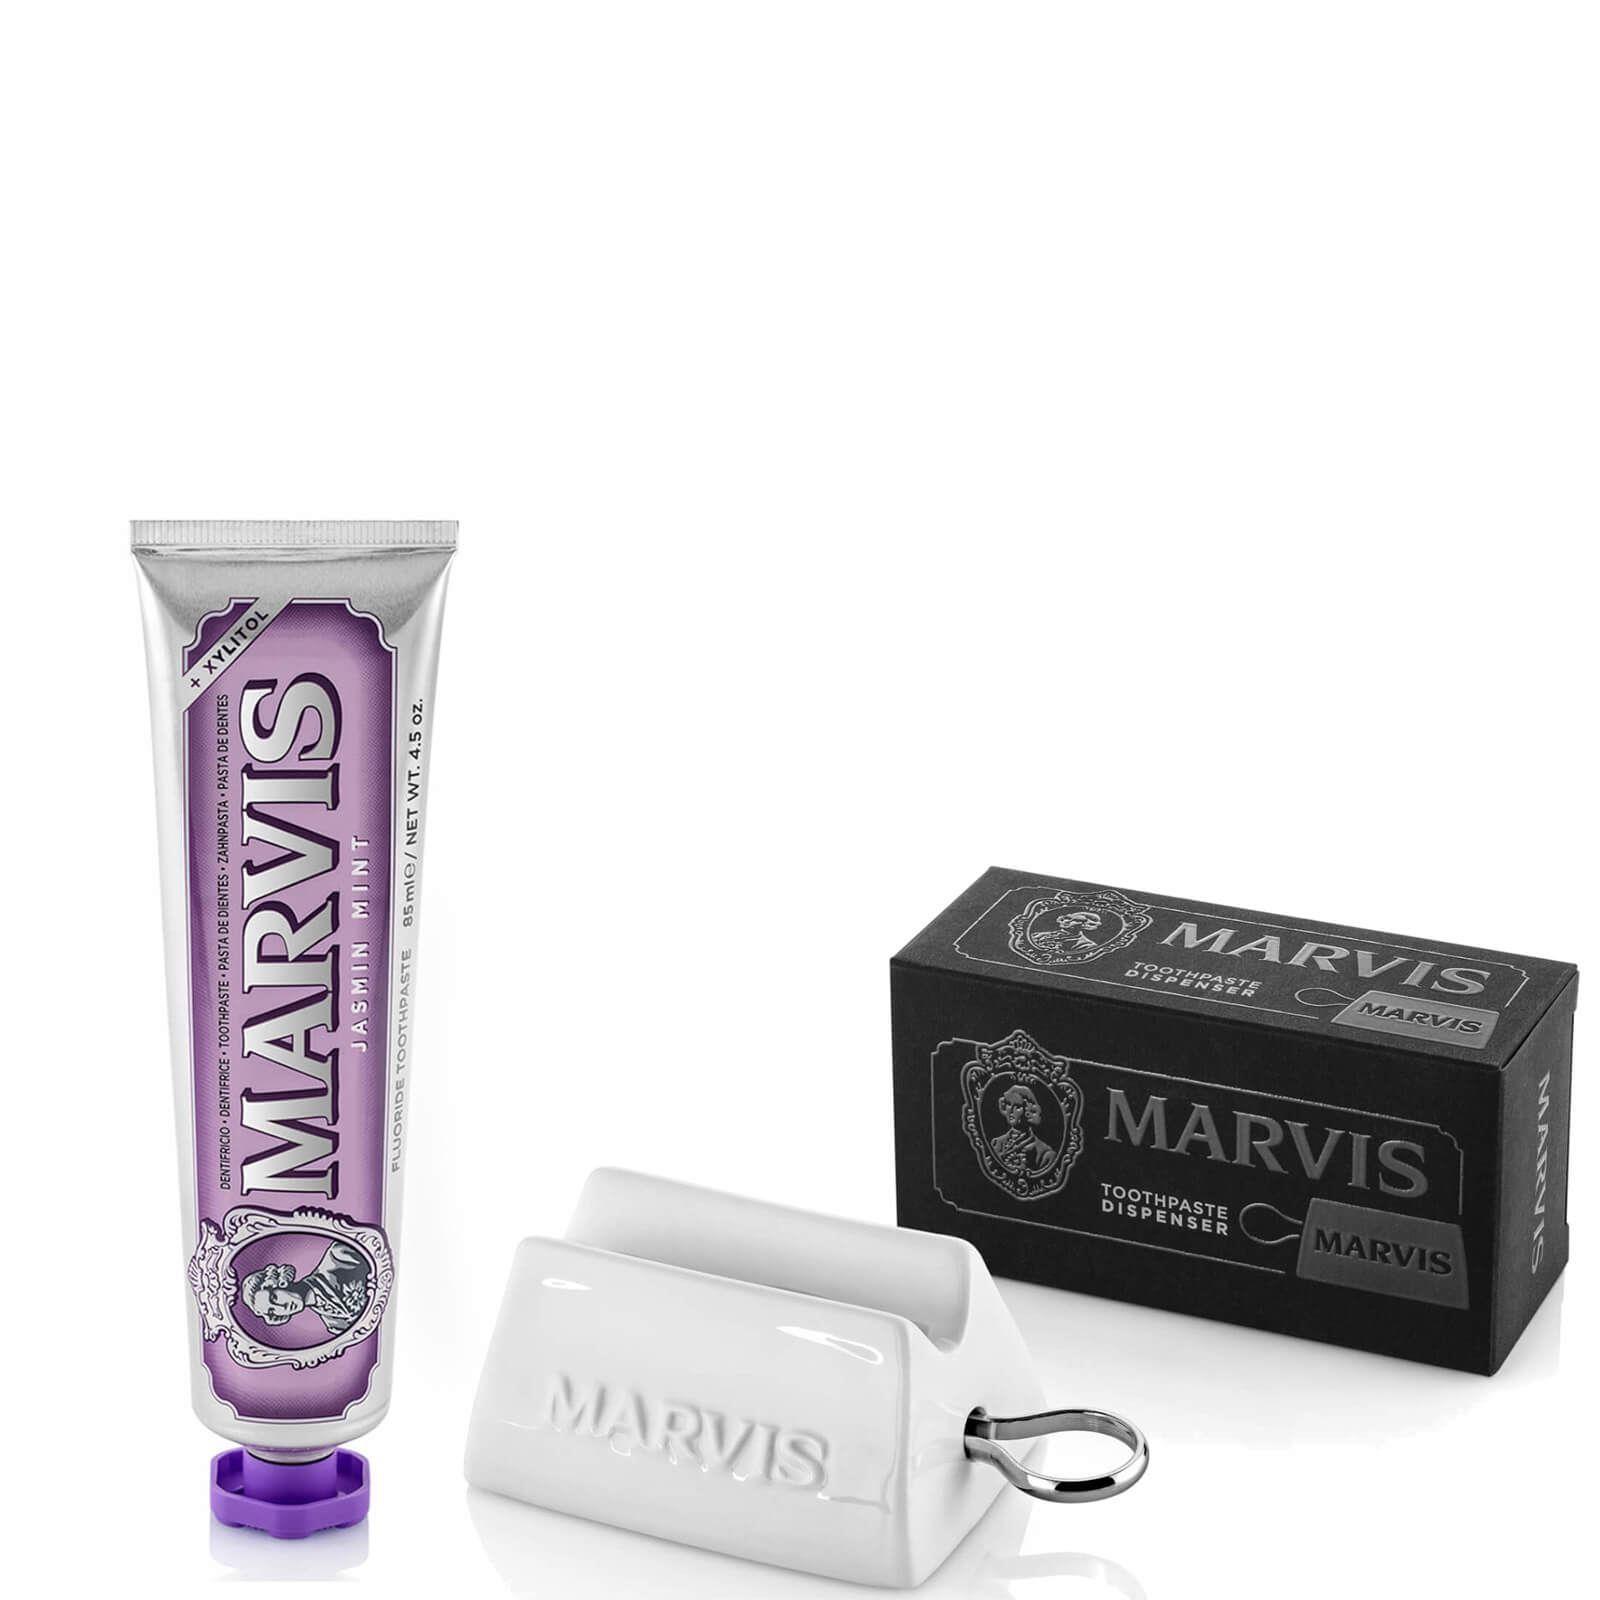 Marvis Jasmine Mint Toothpaste and Squeezer Bundle lookfantastic.com imagine